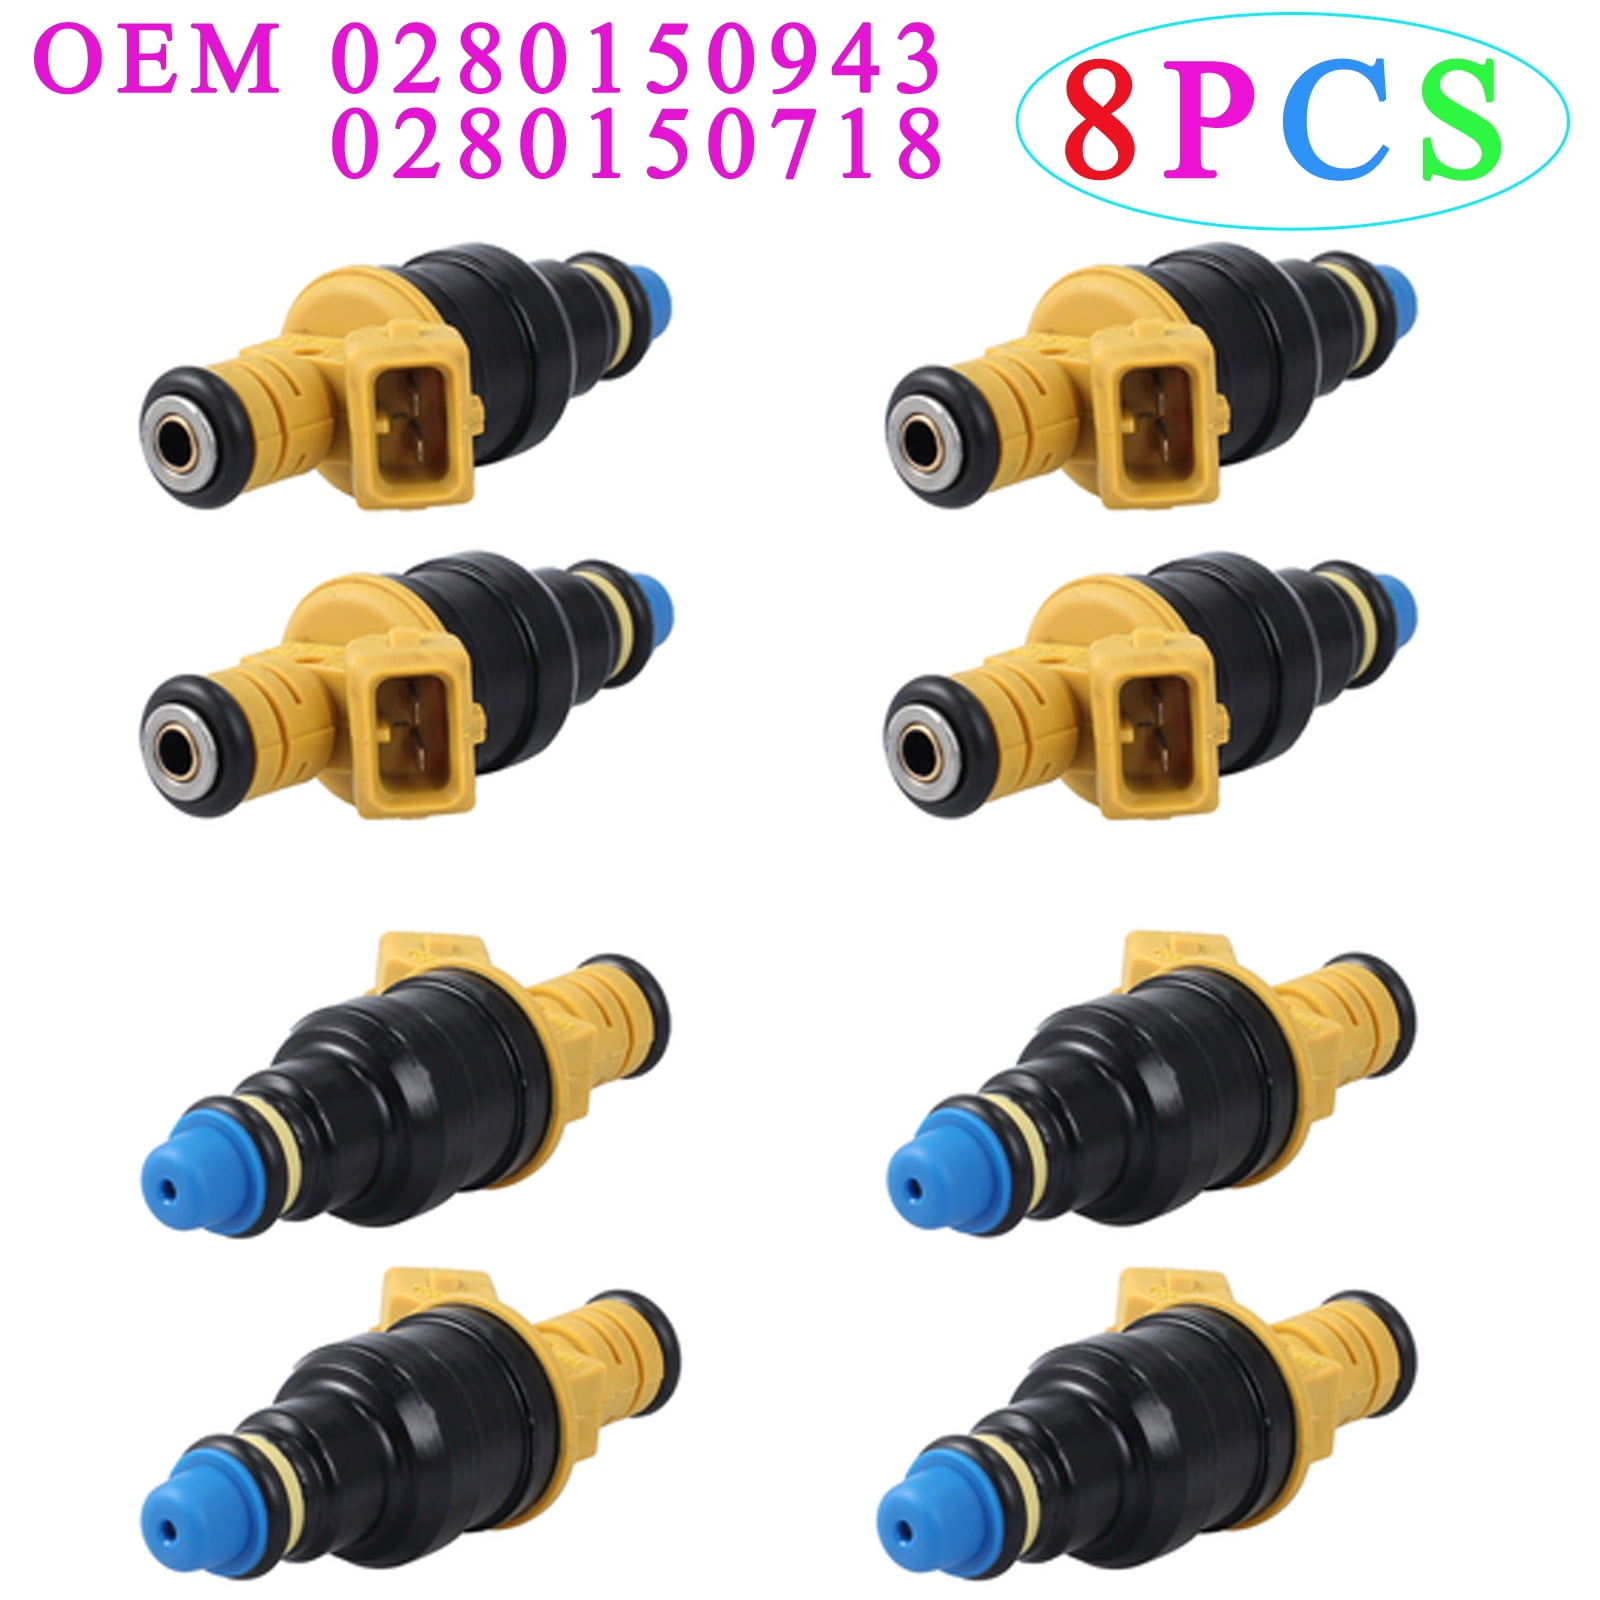 8X Fuel Injectors OEM 0280150718 For Ford F150 F250 F350 93-03 5.0 5.8 4.6 5.4